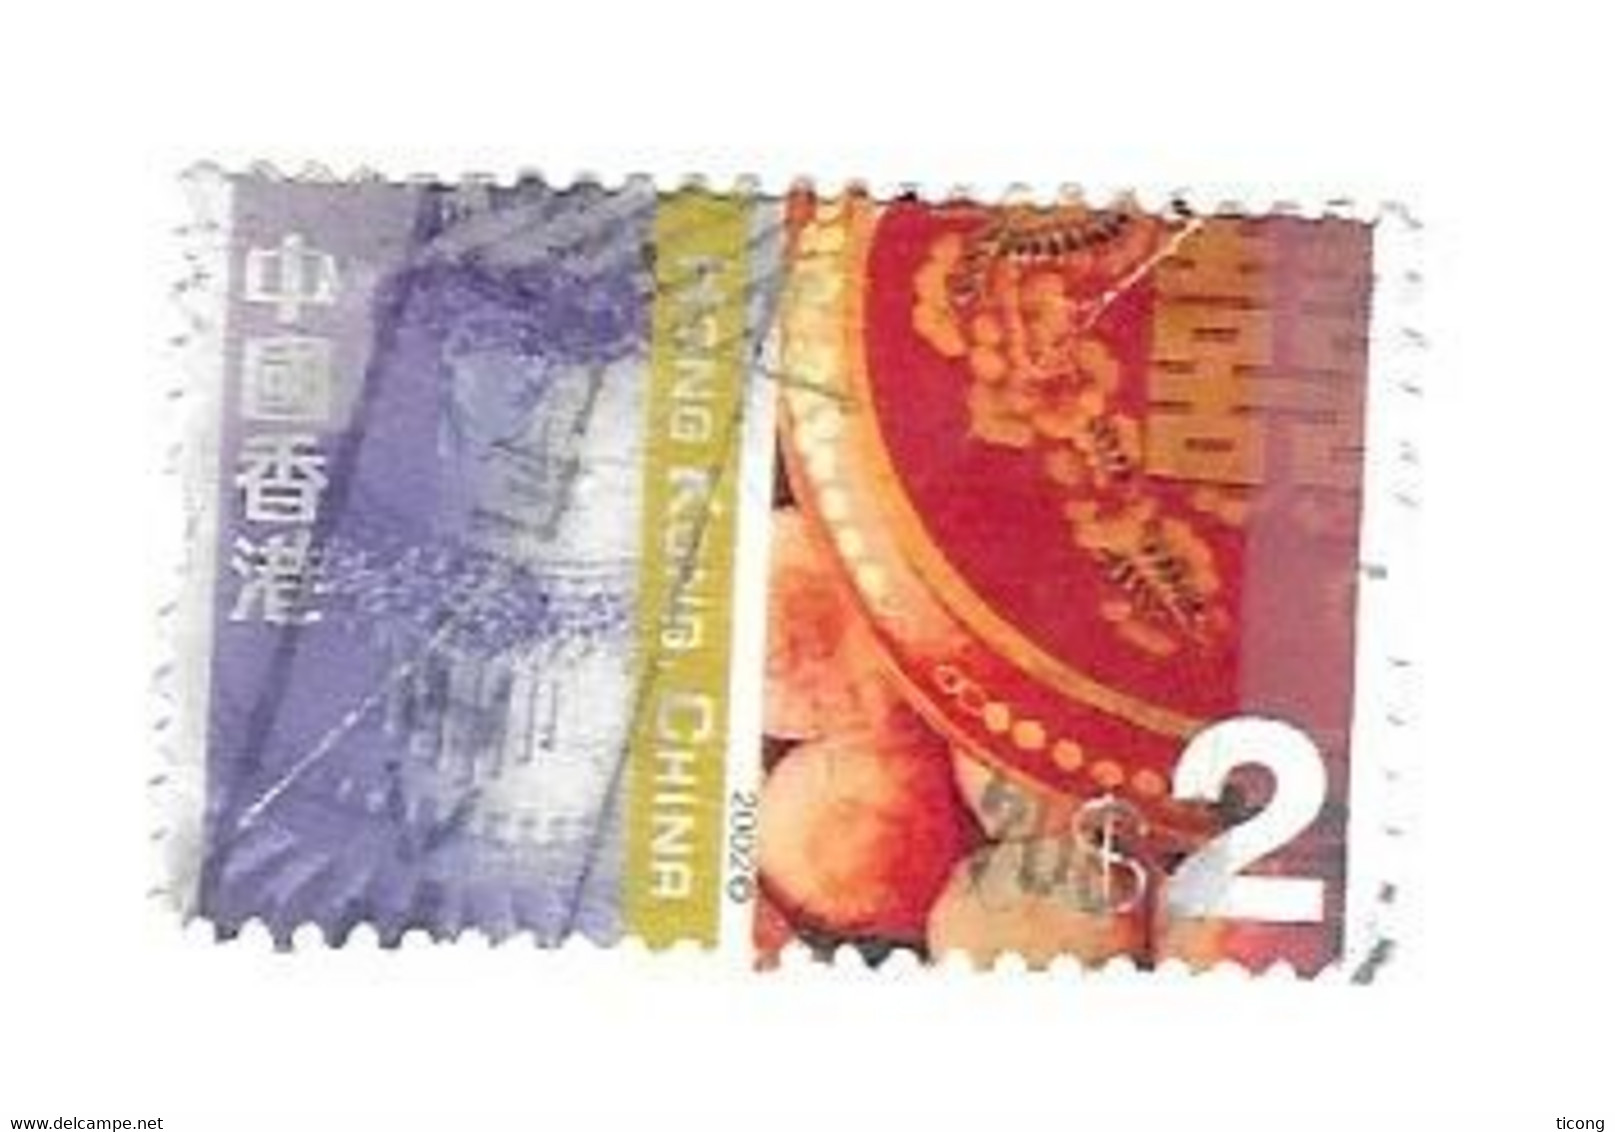 GATEAUX EUROPEEN ET CHINOIS  - TIMBRE DE CHINE  HONG KONG DE 2002, VOIR LE SCANNER - Gebraucht